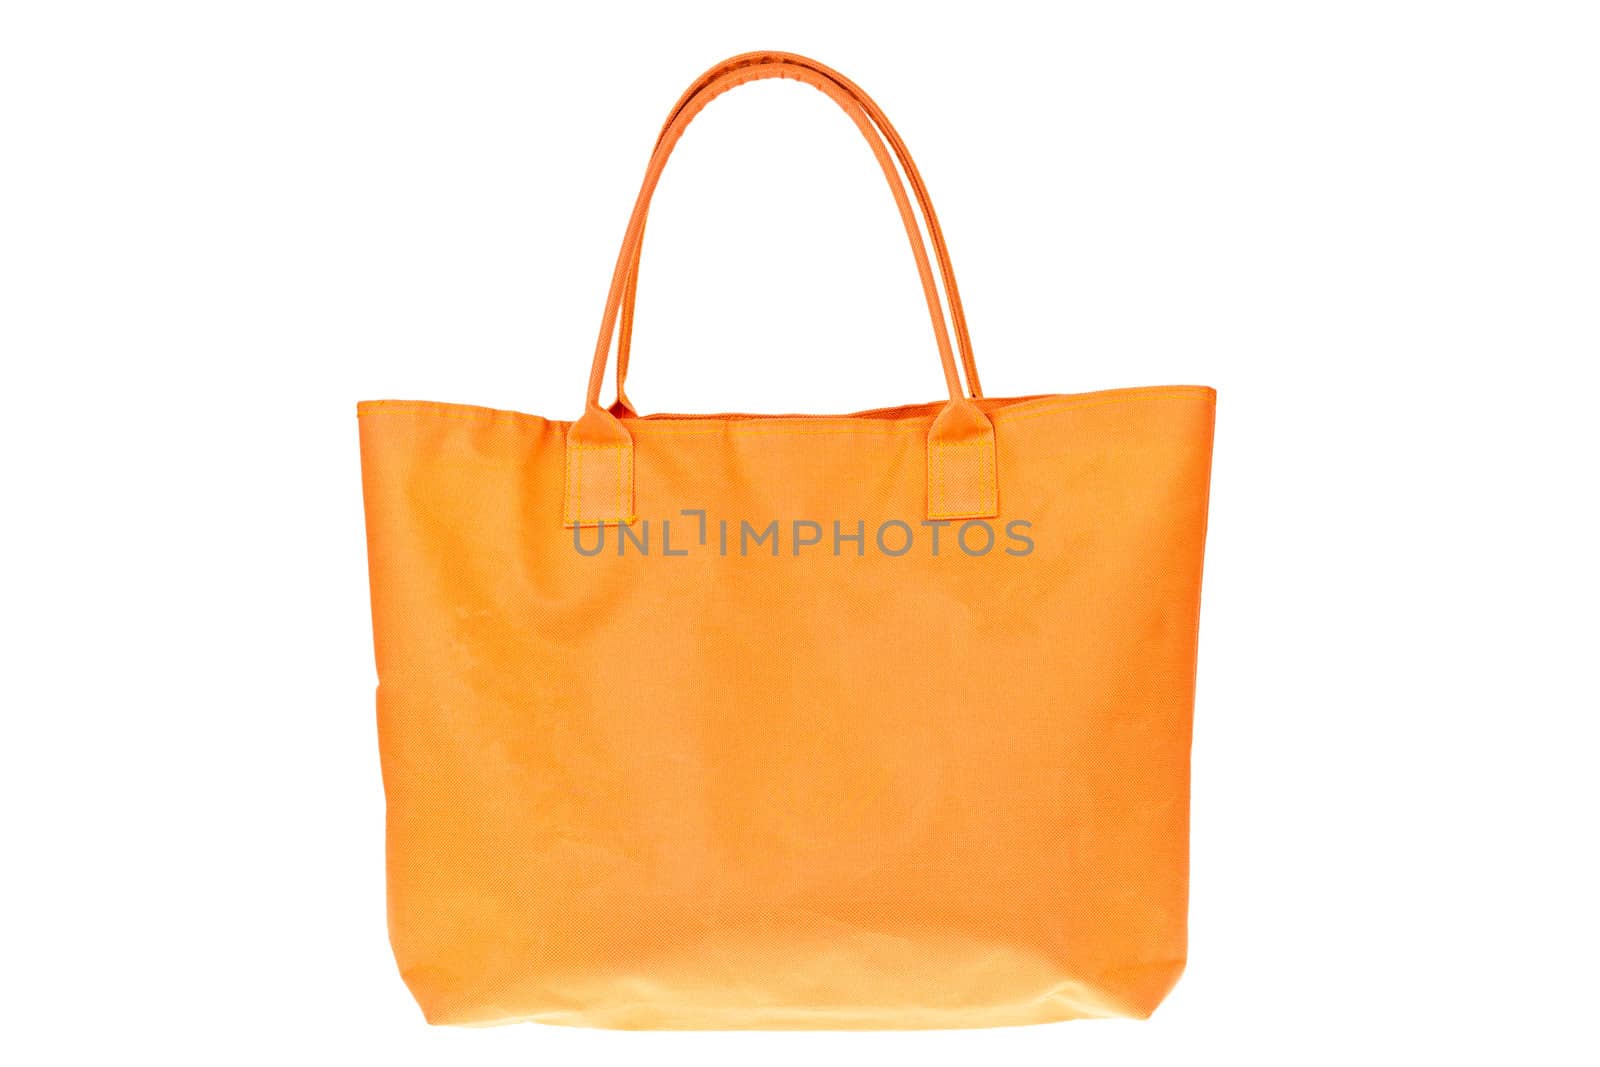 Colorful orange cotton bag on white isolated background.